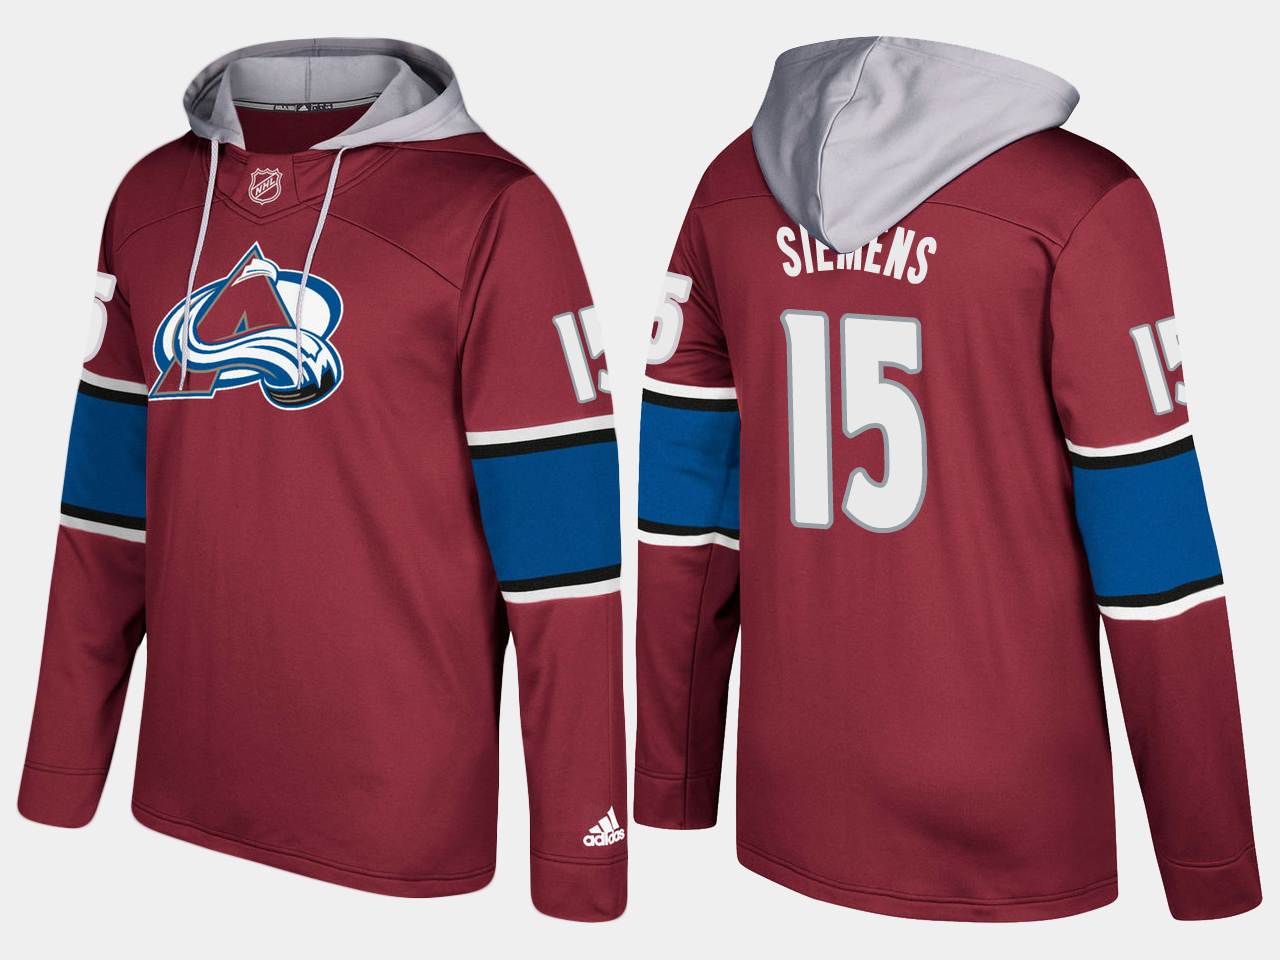 Men NHL Colorado avalanche #15 duncan siemens burgundy hoodie